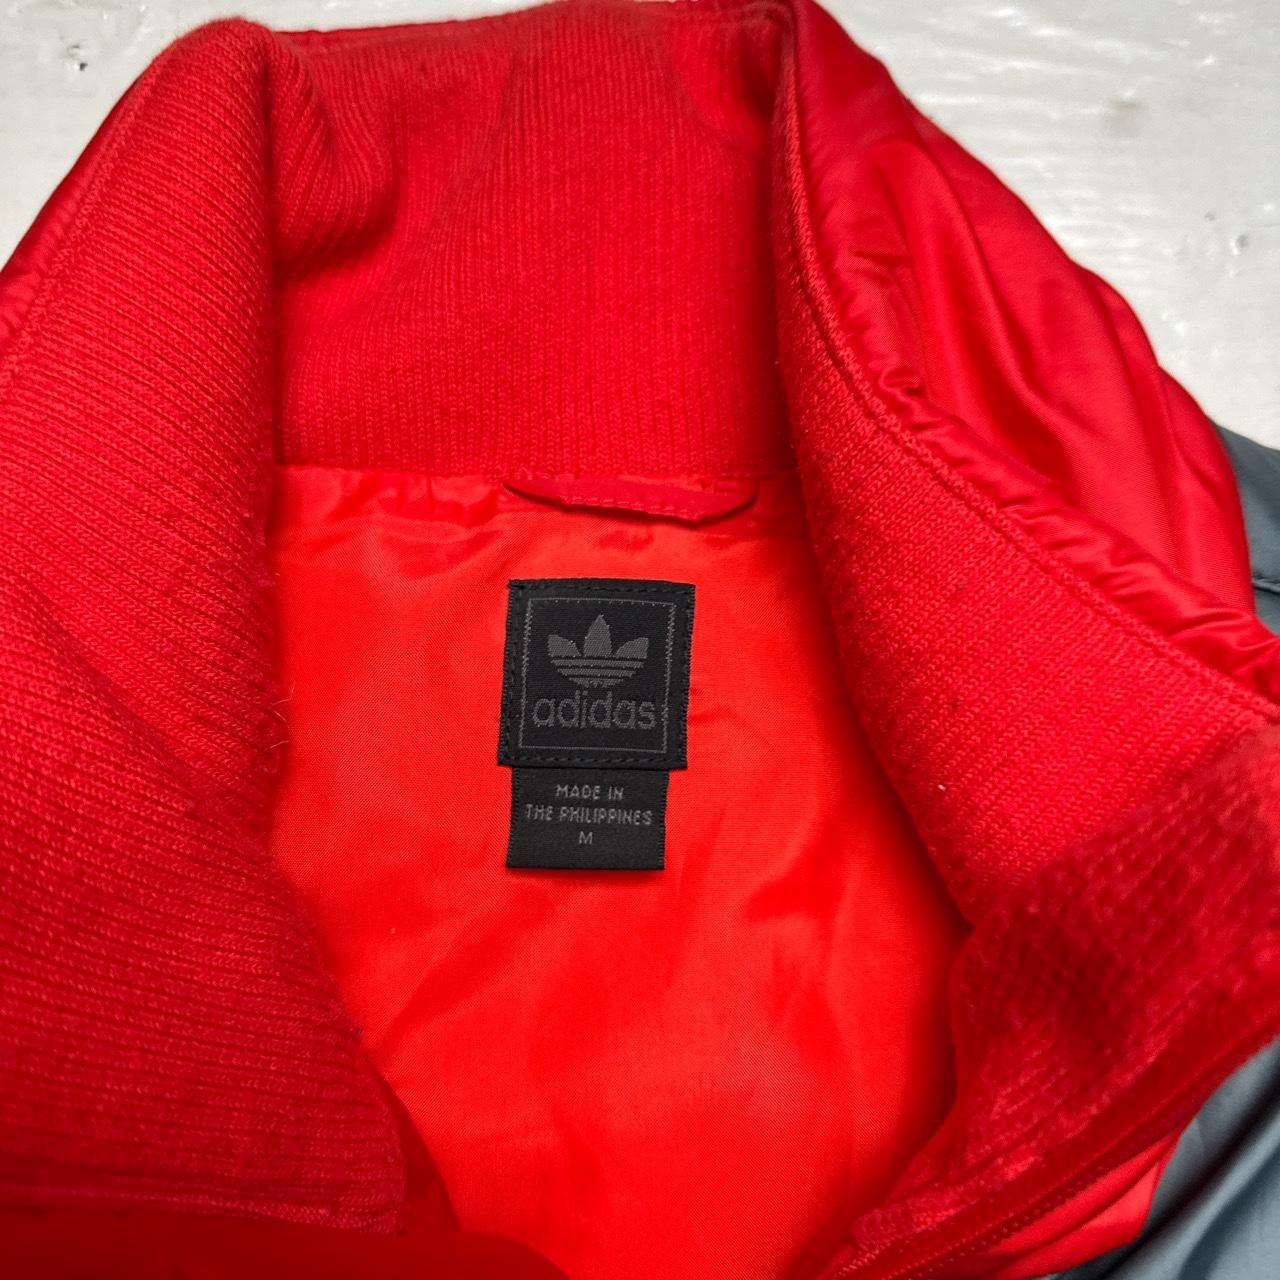 Adidas Originals Red and Grey Gilet Bodywarmer